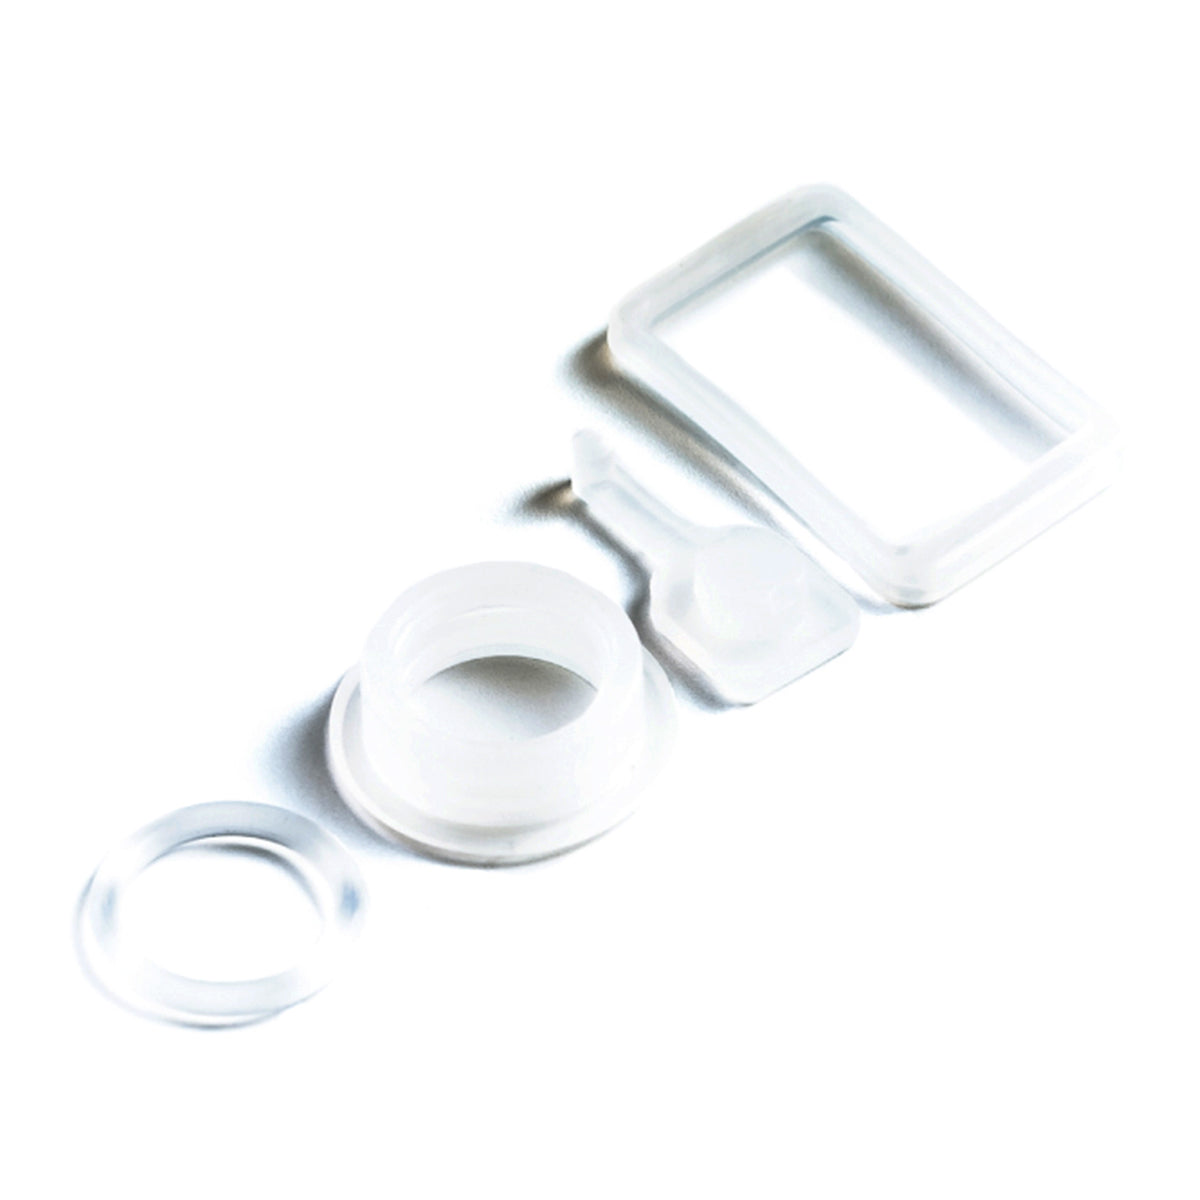 SnailTank Clear O-ring Kit by Atmizoo